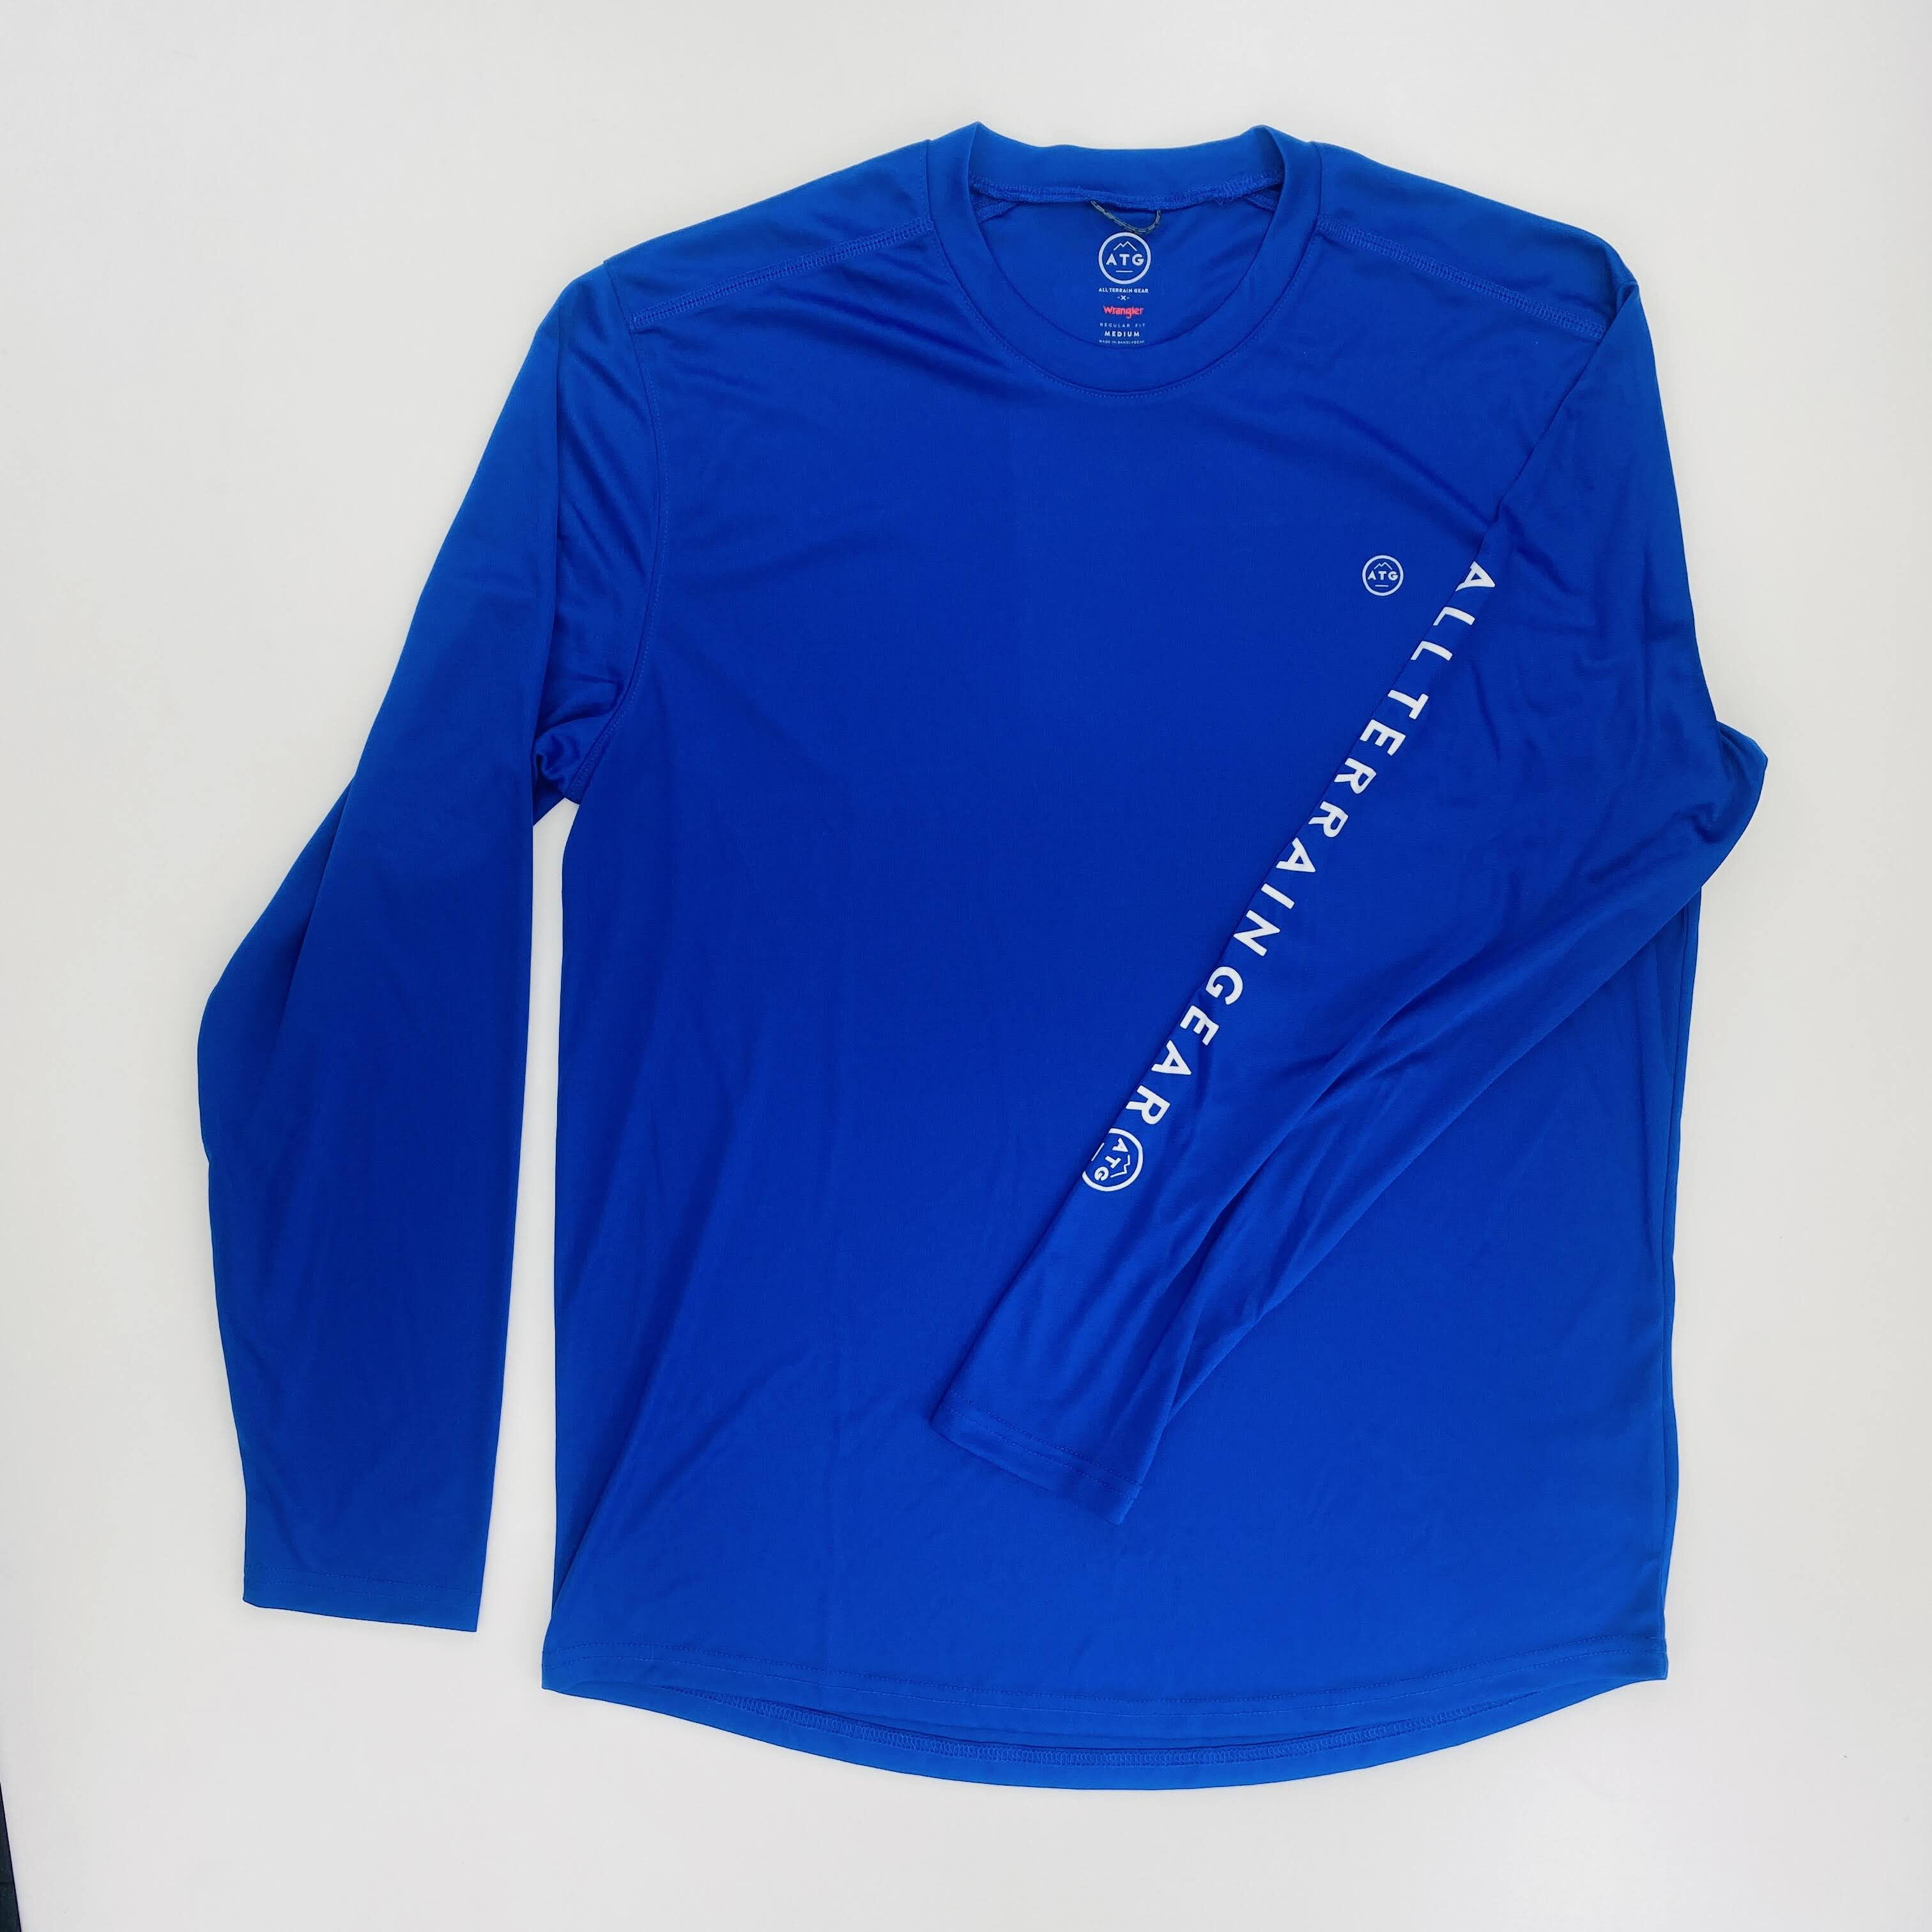 Wrangler Ls Sun Tee - Seconde main T-shirt homme - Bleu - XL | Hardloop